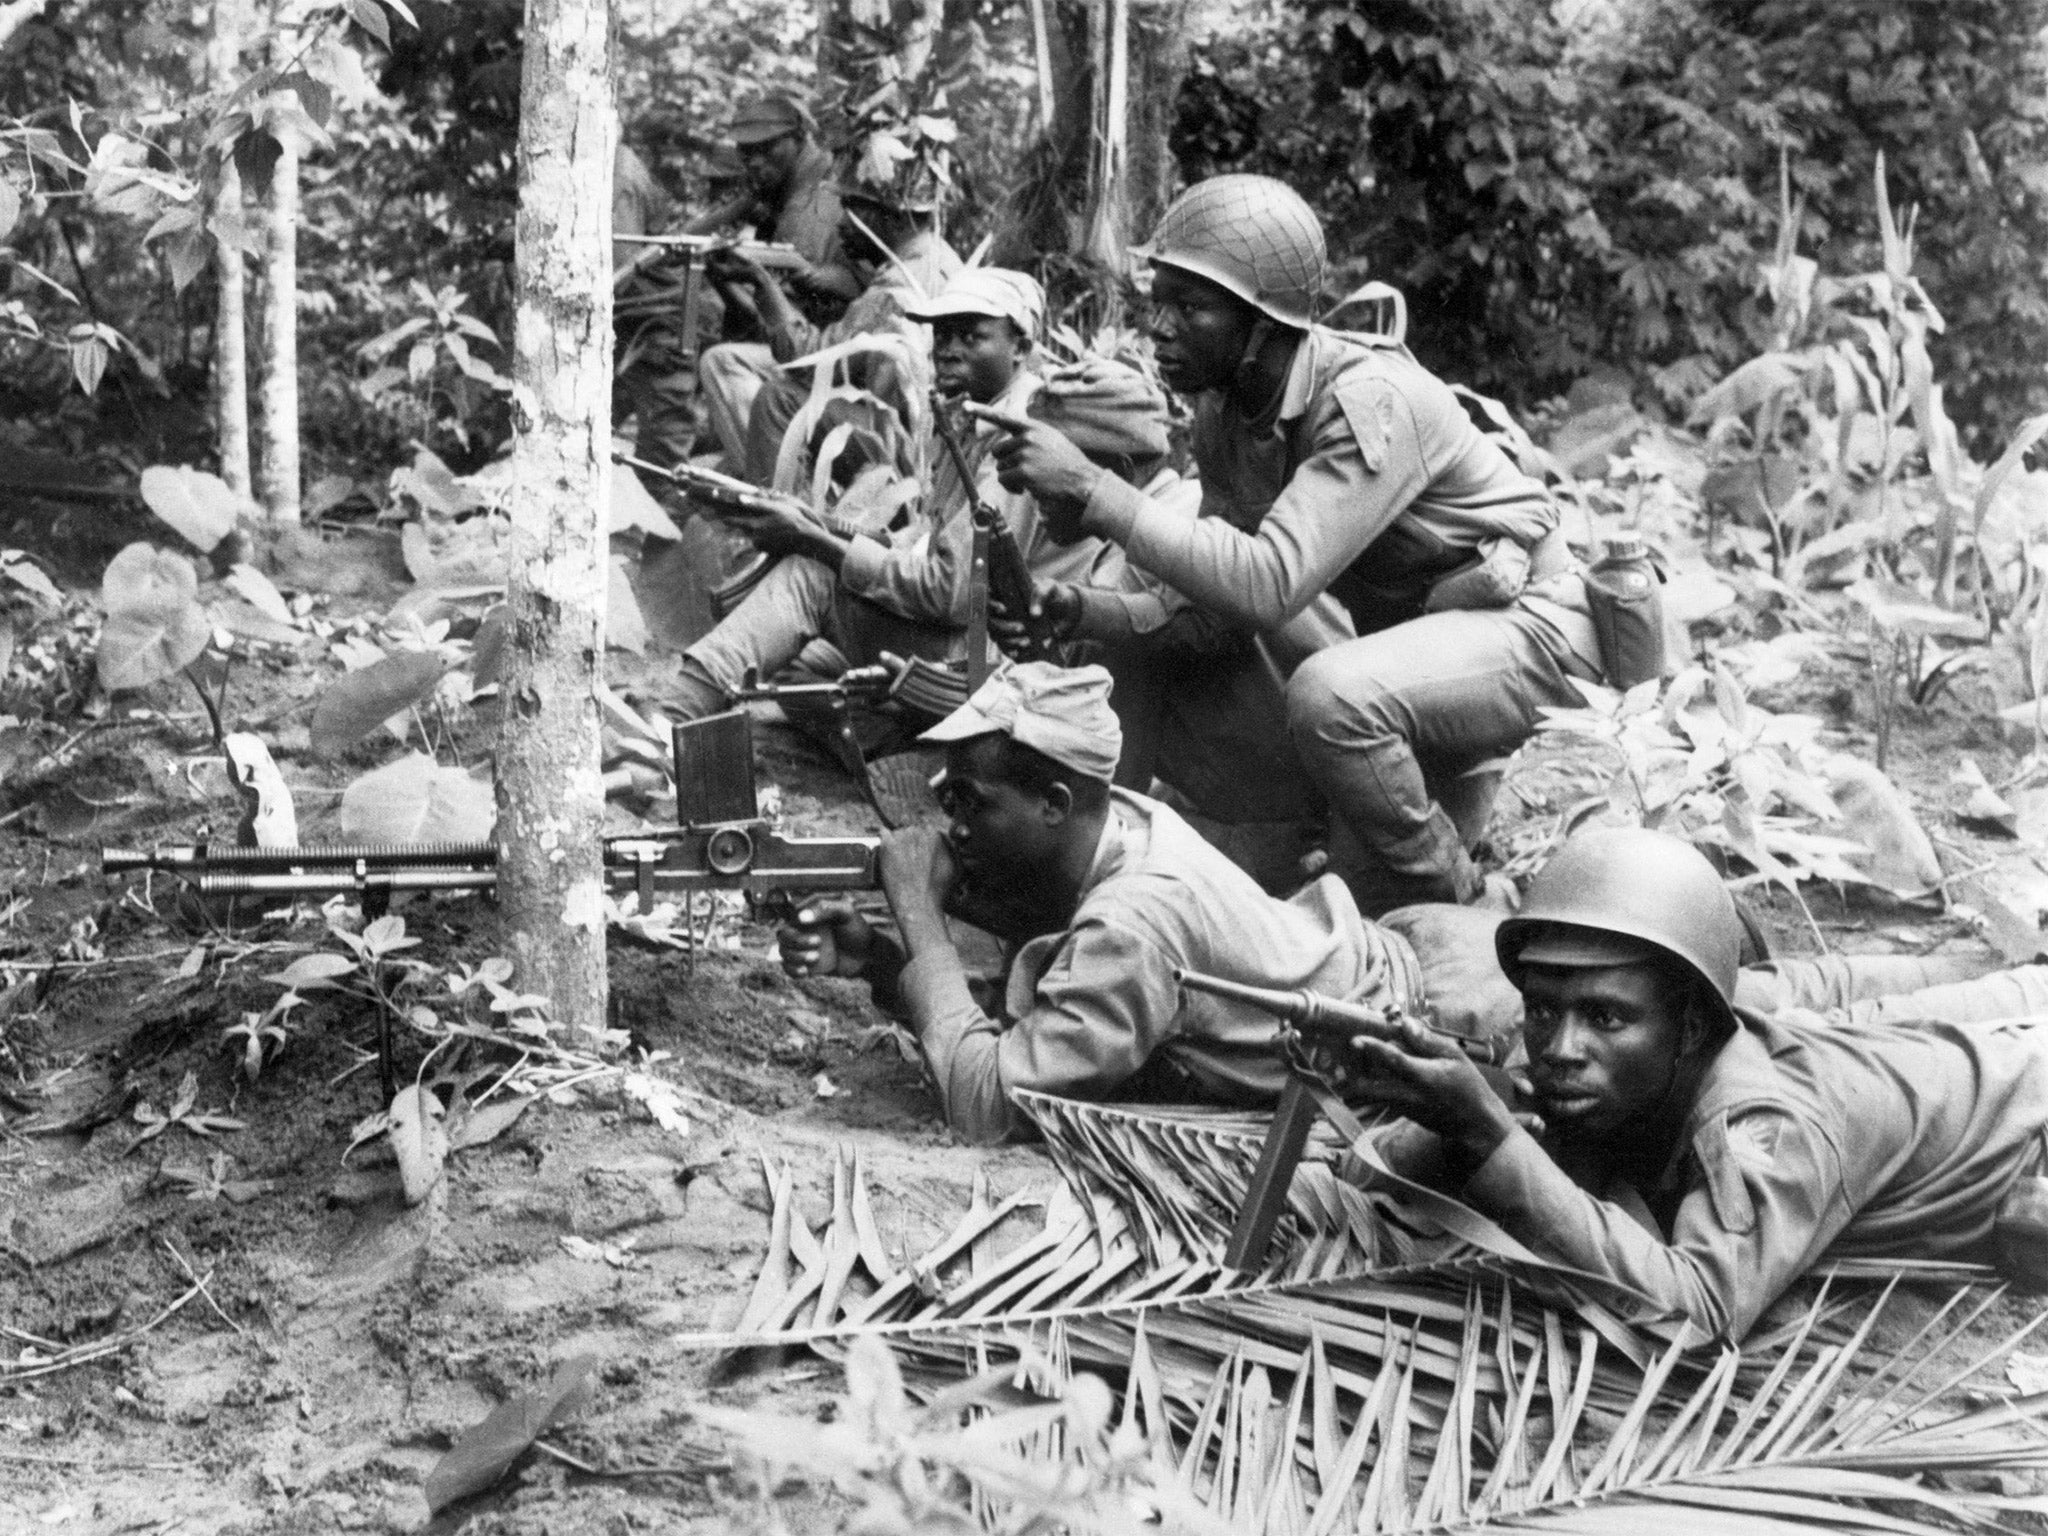 Biafran soldiers during Nigeria’s civil war in 1967 (Getty)